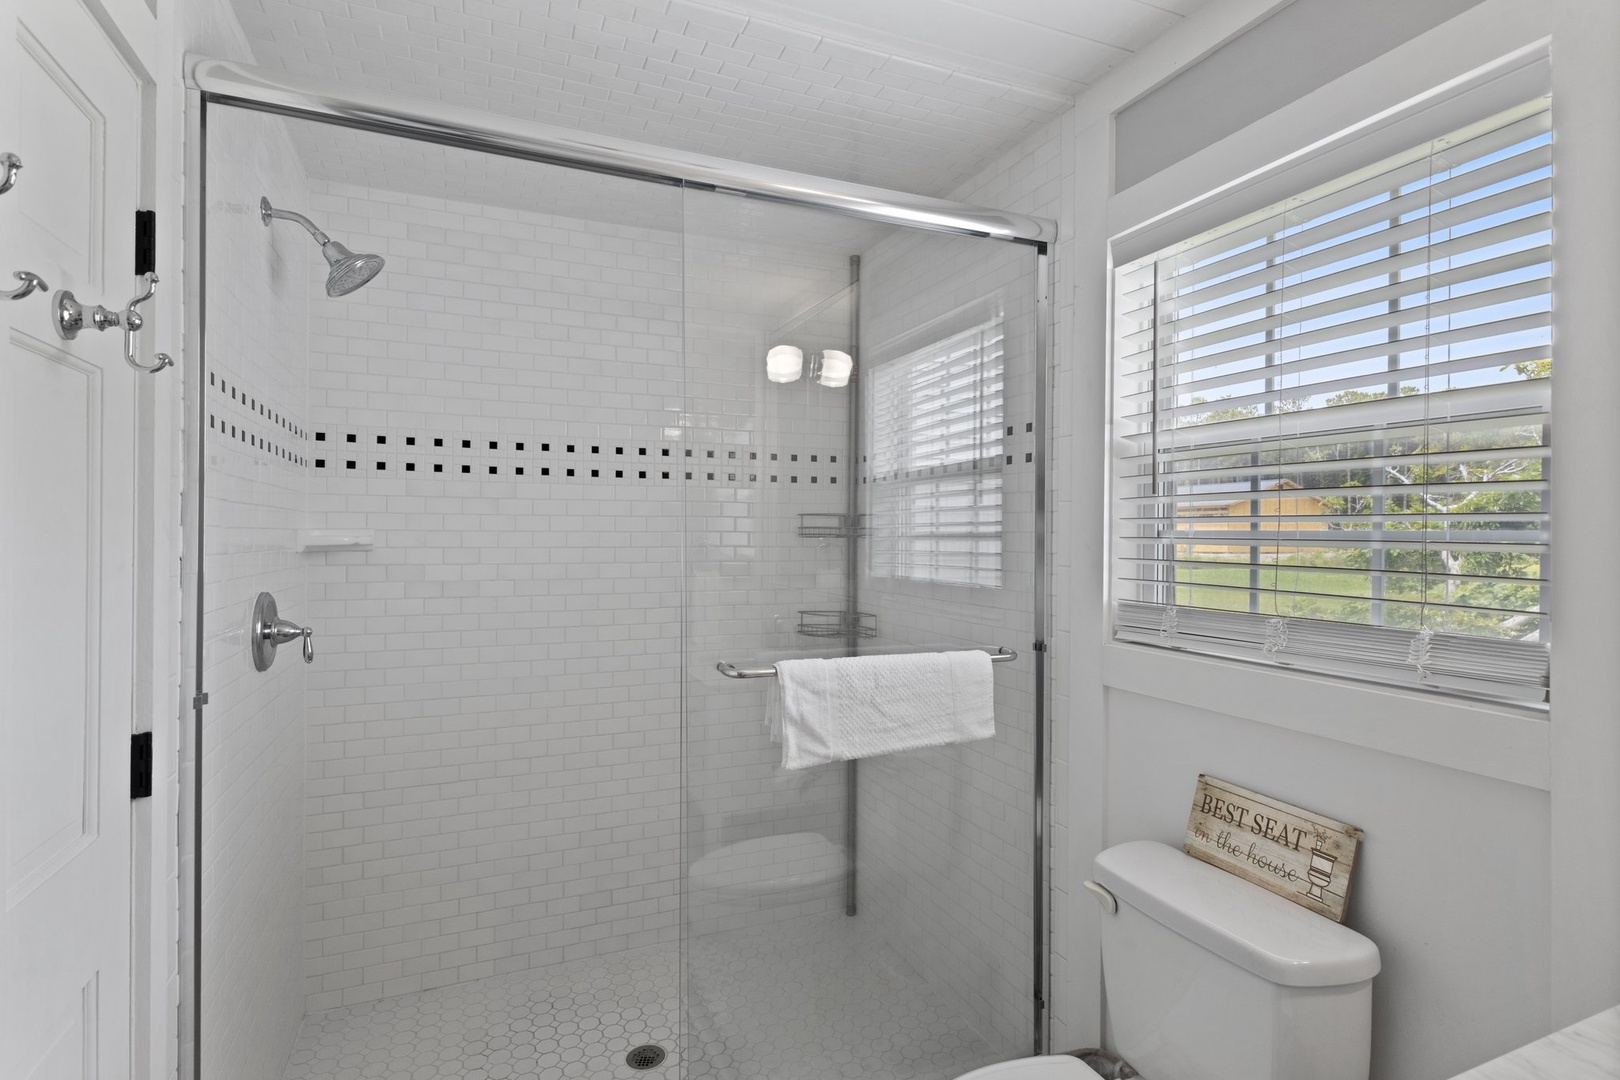 Primary En Suite Bath with Tiled Shower